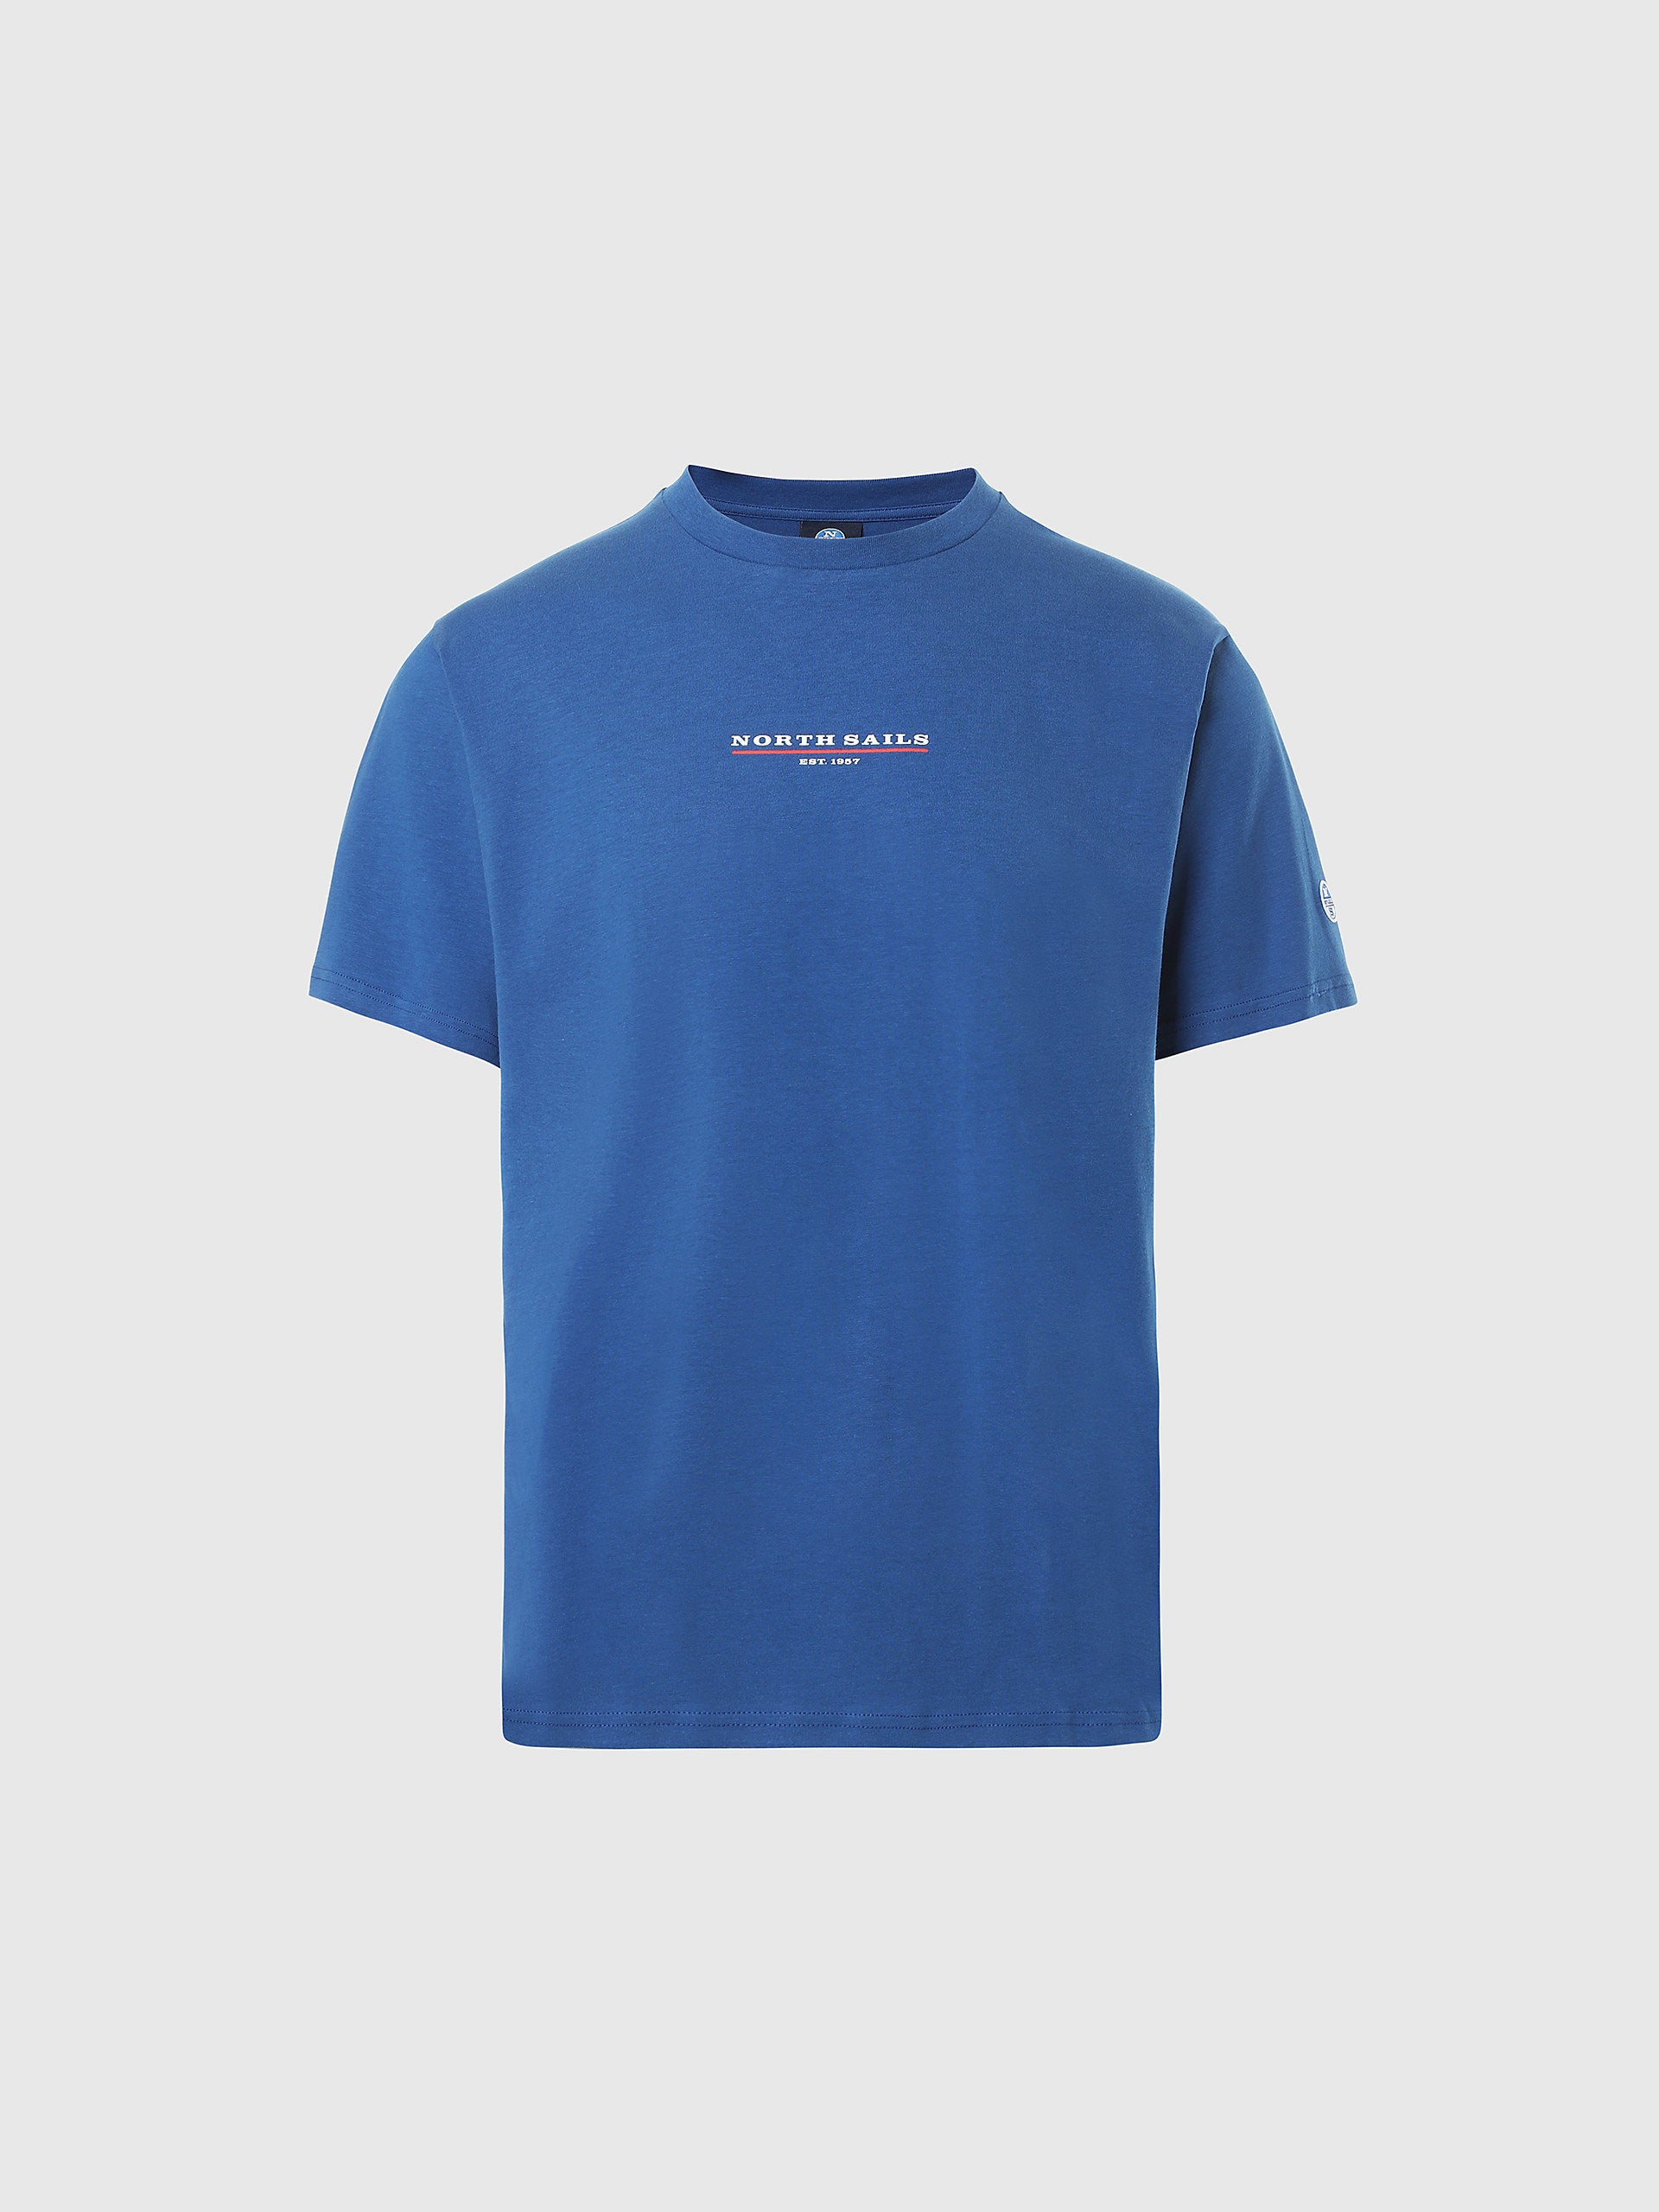 North Sails - T-shirt with chest printNorth SailsOcean blueXXL